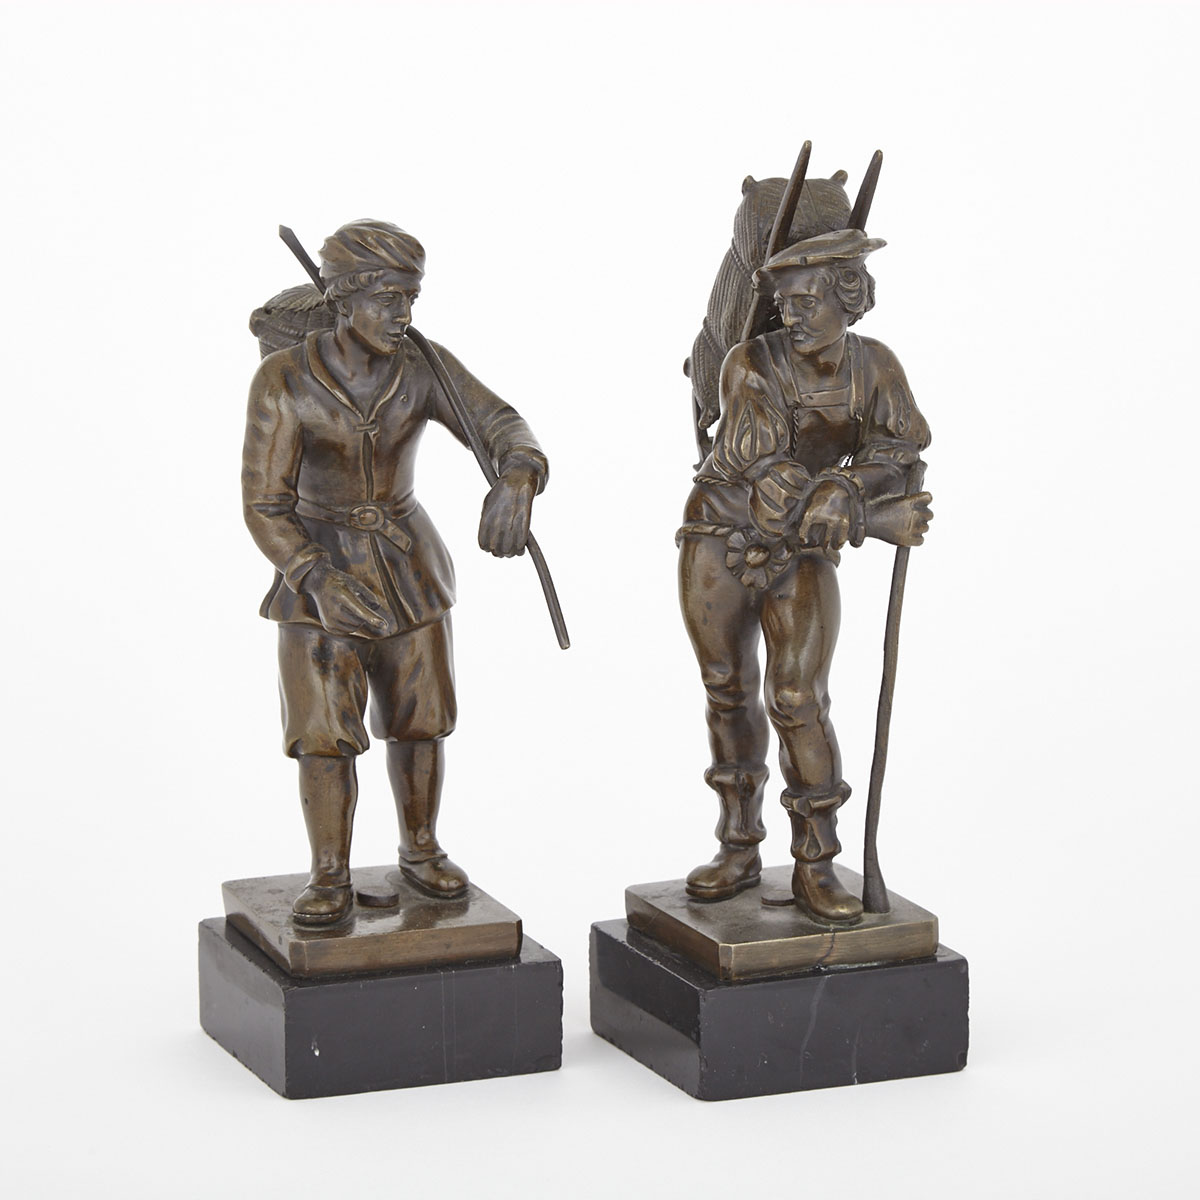 Pair of Continental Patinated Bronze Figures of Peddlars, 19th century